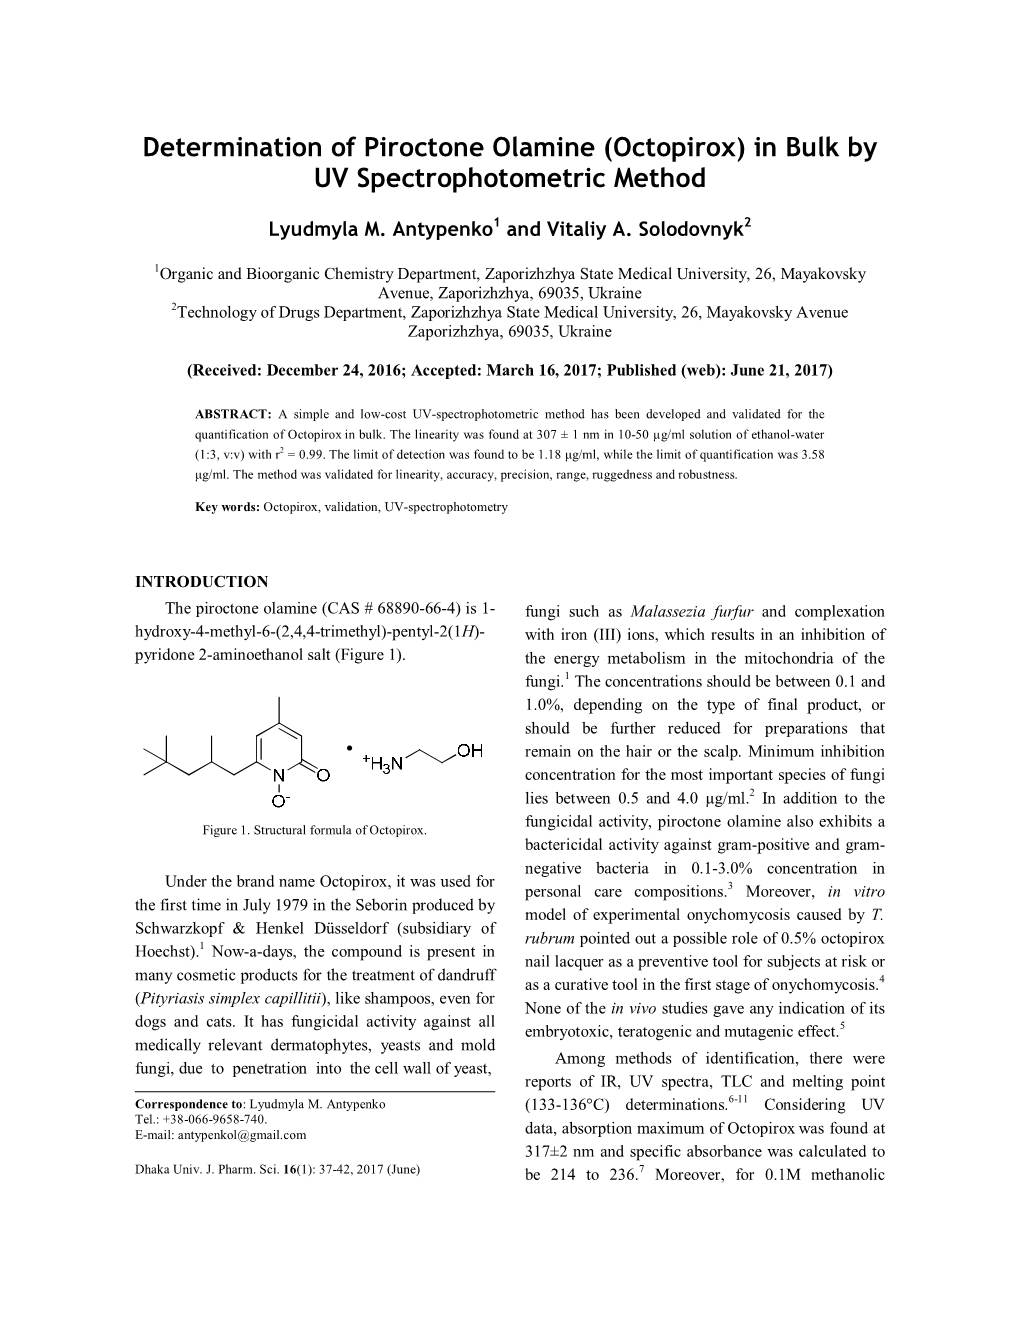 Determination of Рiroctone Olamine (Octopirox) in Bulk by UV Spectrophotometric Method